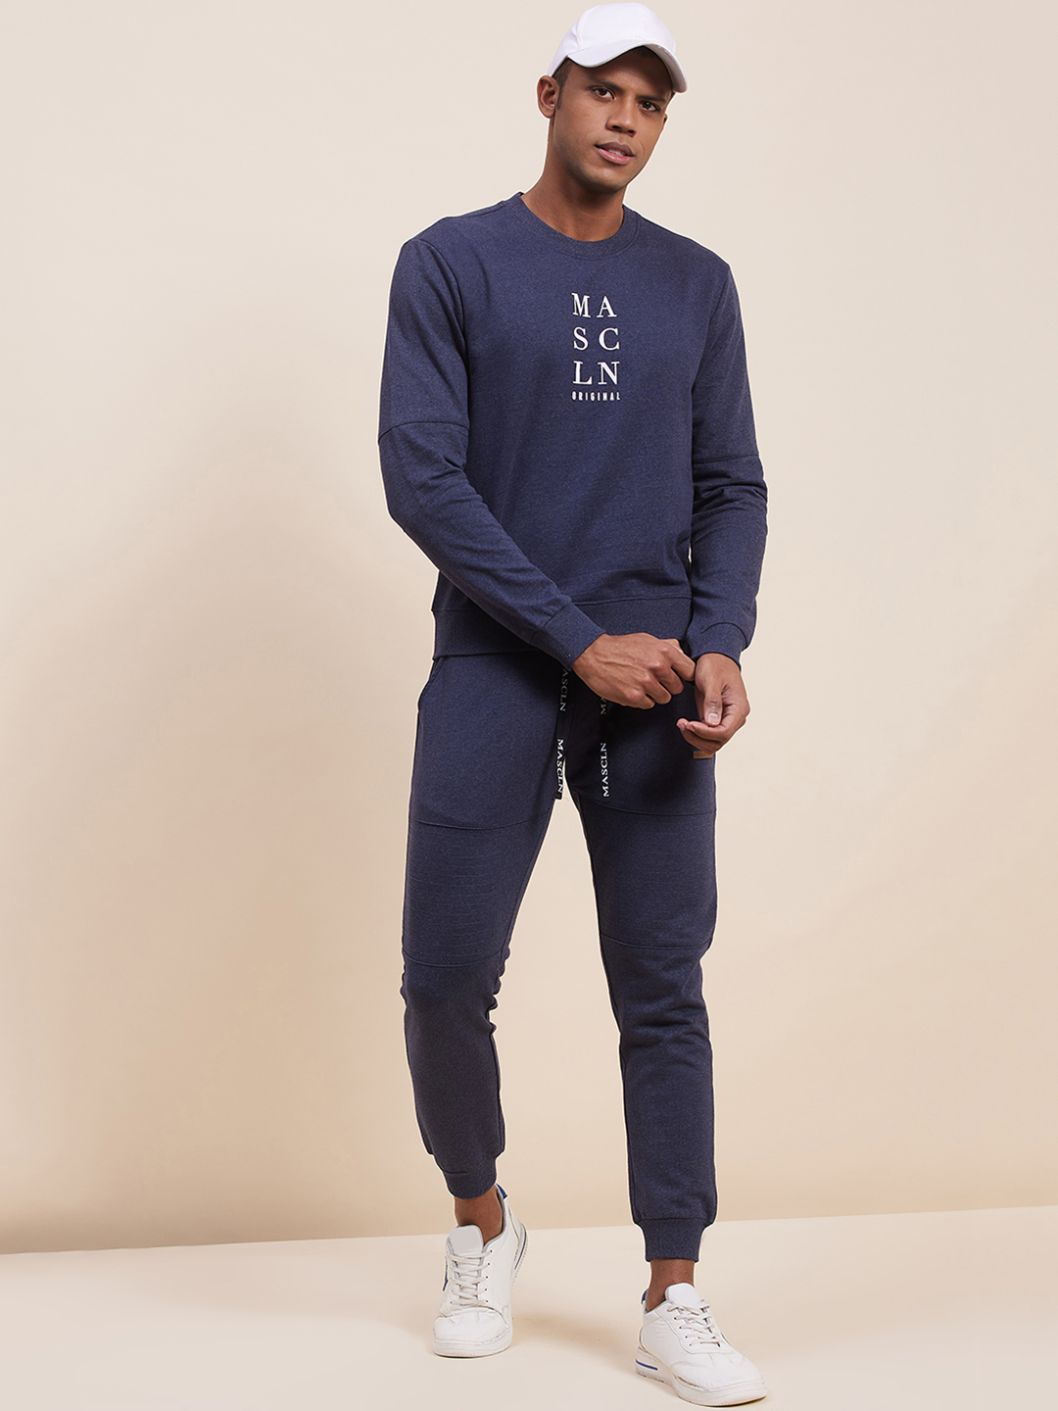 Men's Blue Melange Vertical MASCLN Print Sweatshirt